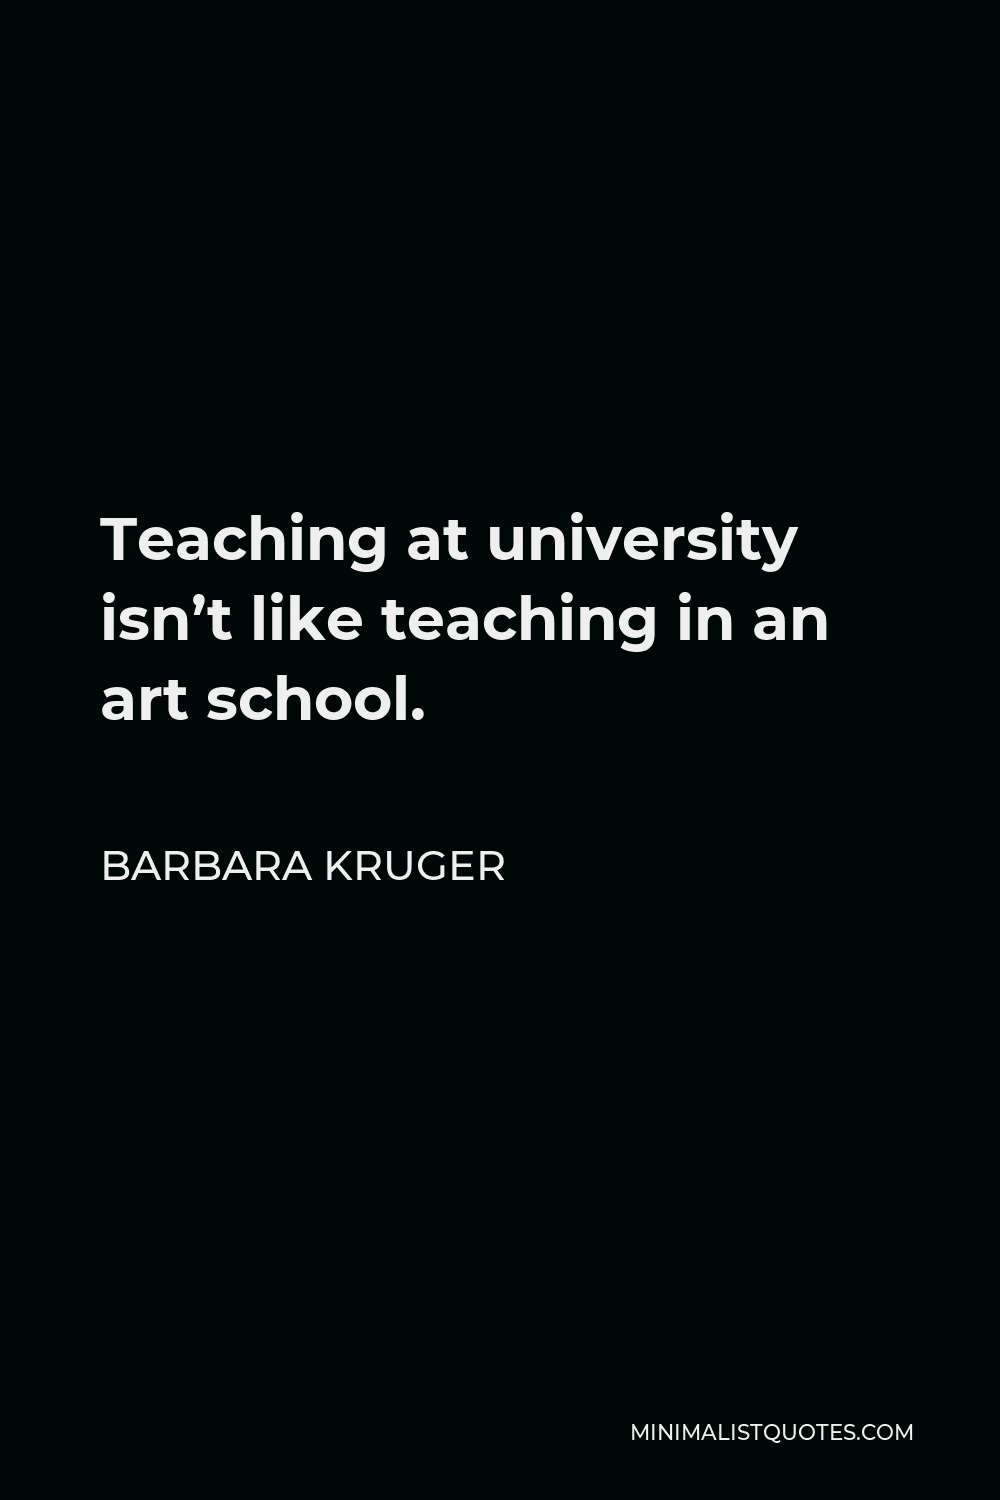 Barbara Kruger Quote - Teaching at university isn’t like teaching in an art school.